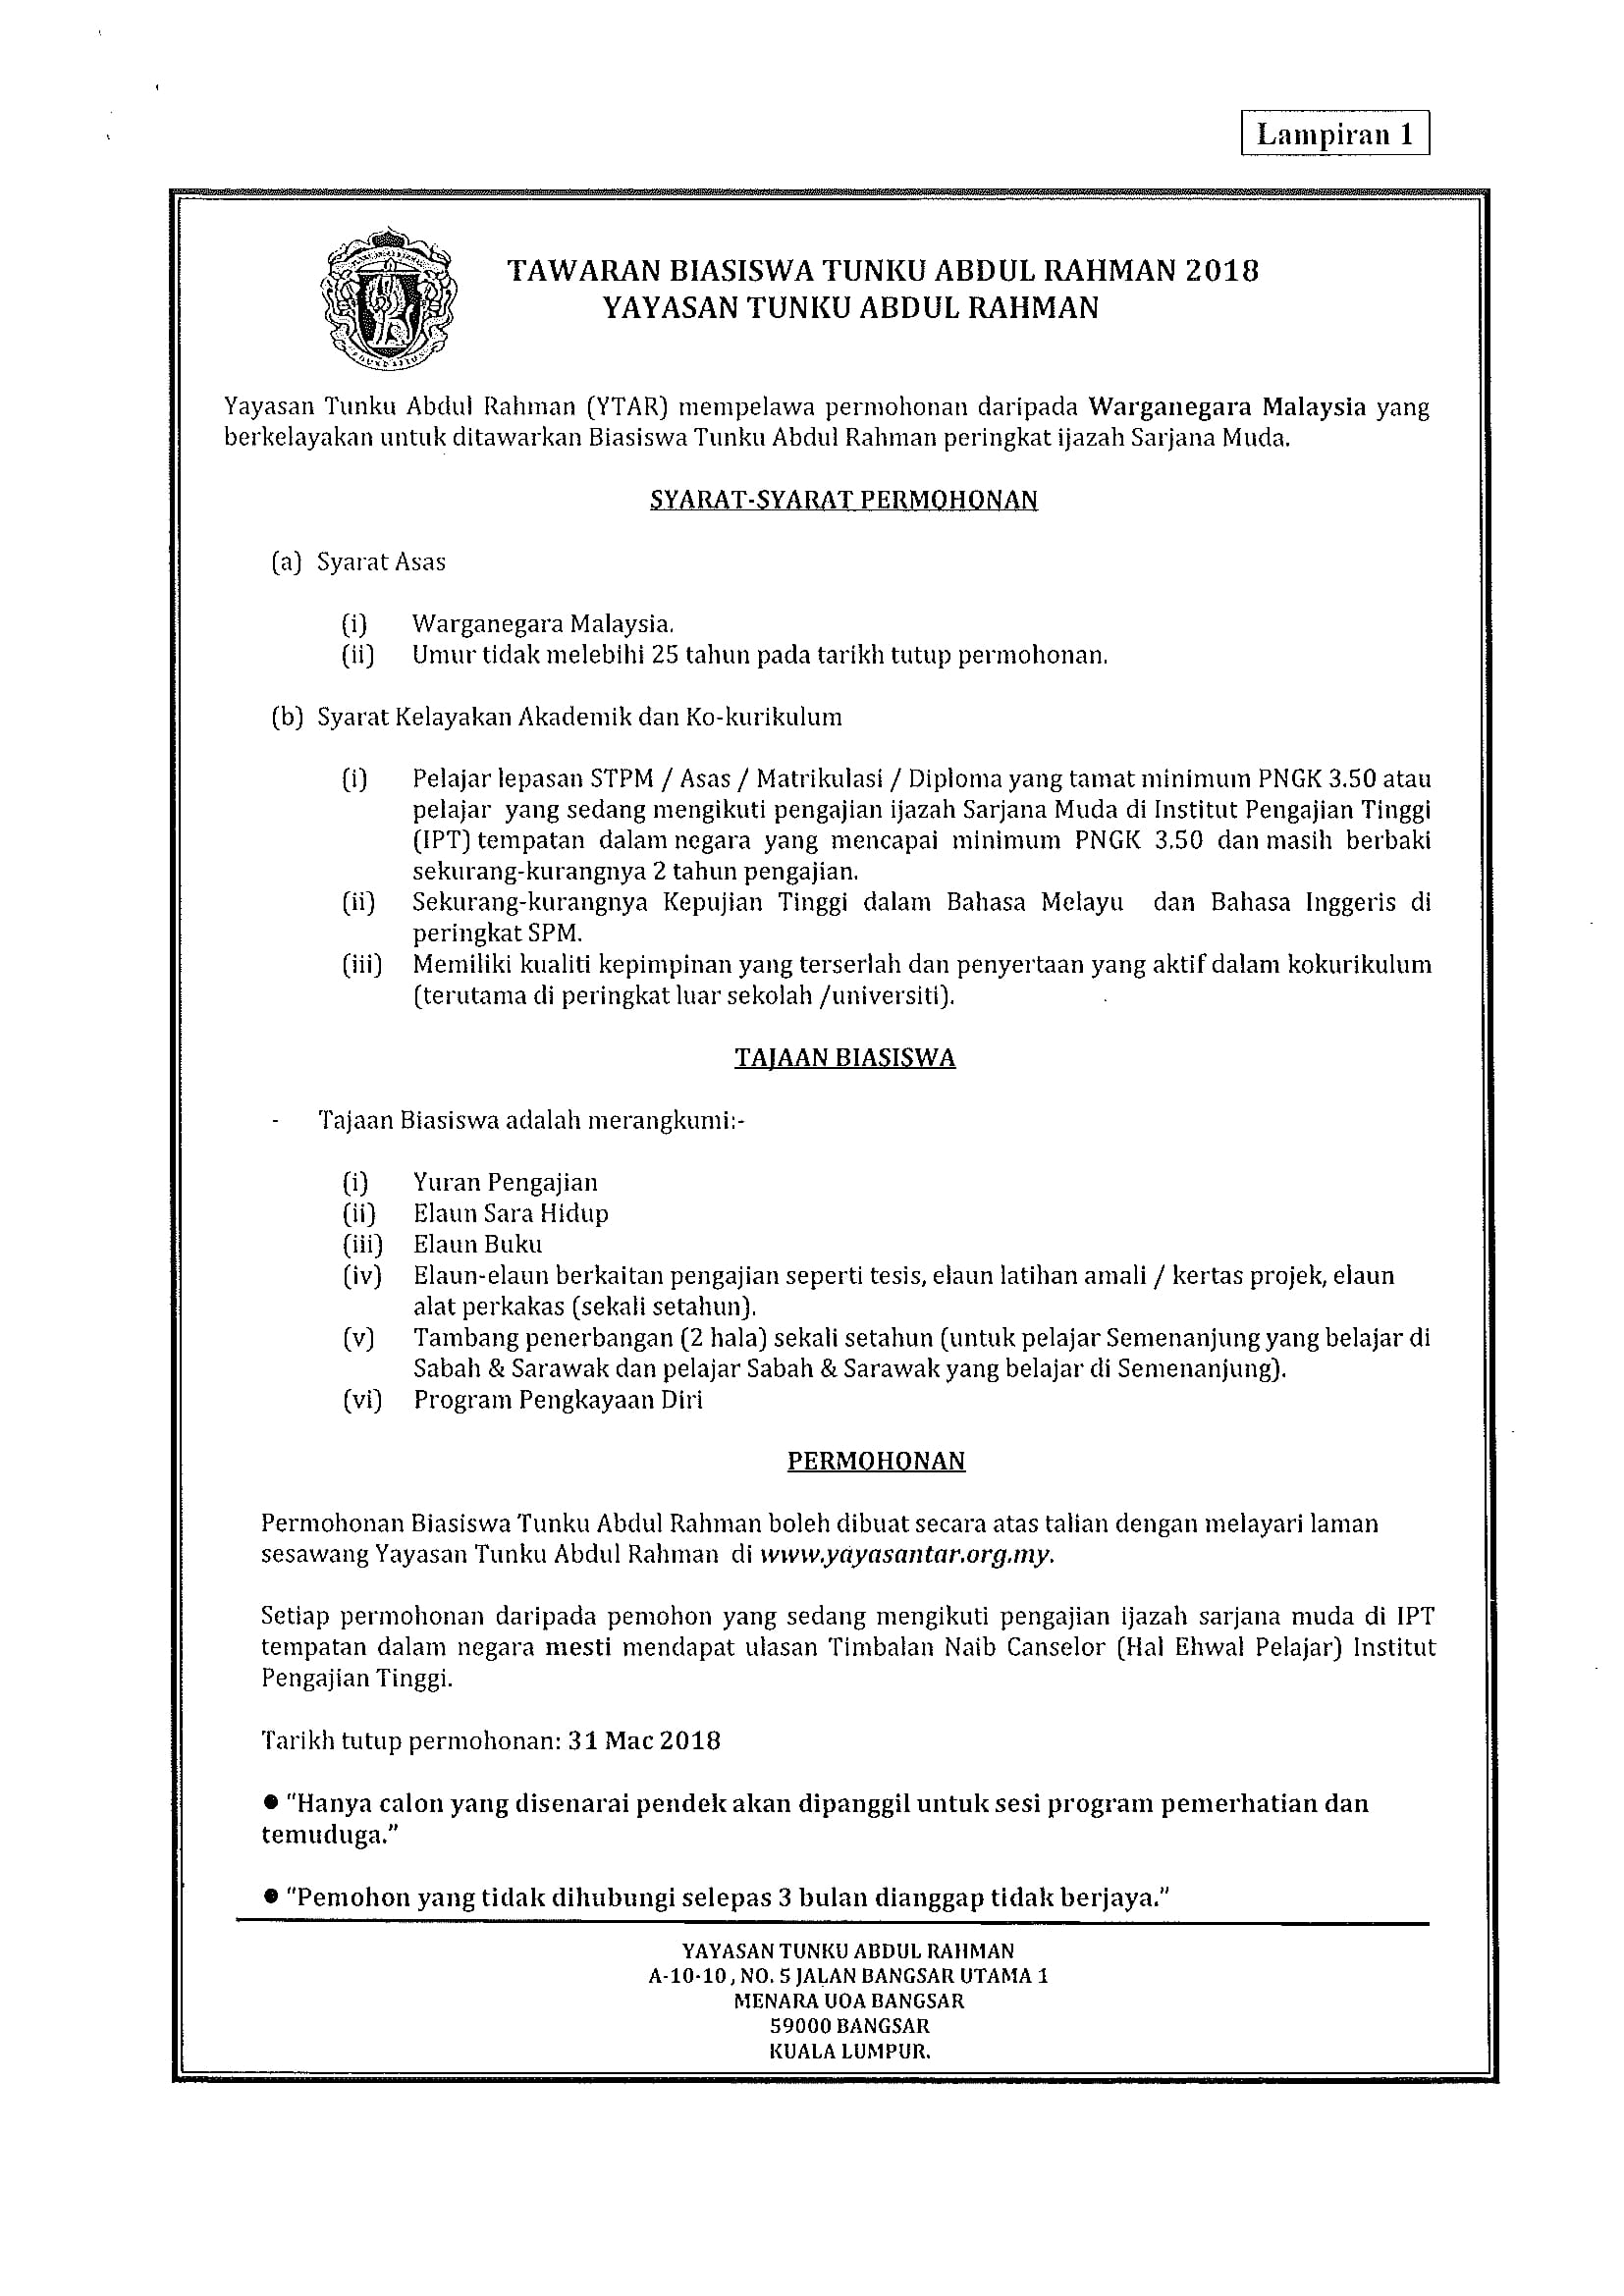 APPLICATION FOR TUNKU ABDUL RAHMAN 2018 SCHOLARSHIP (MALAYSIAN ONLY) - PG 1